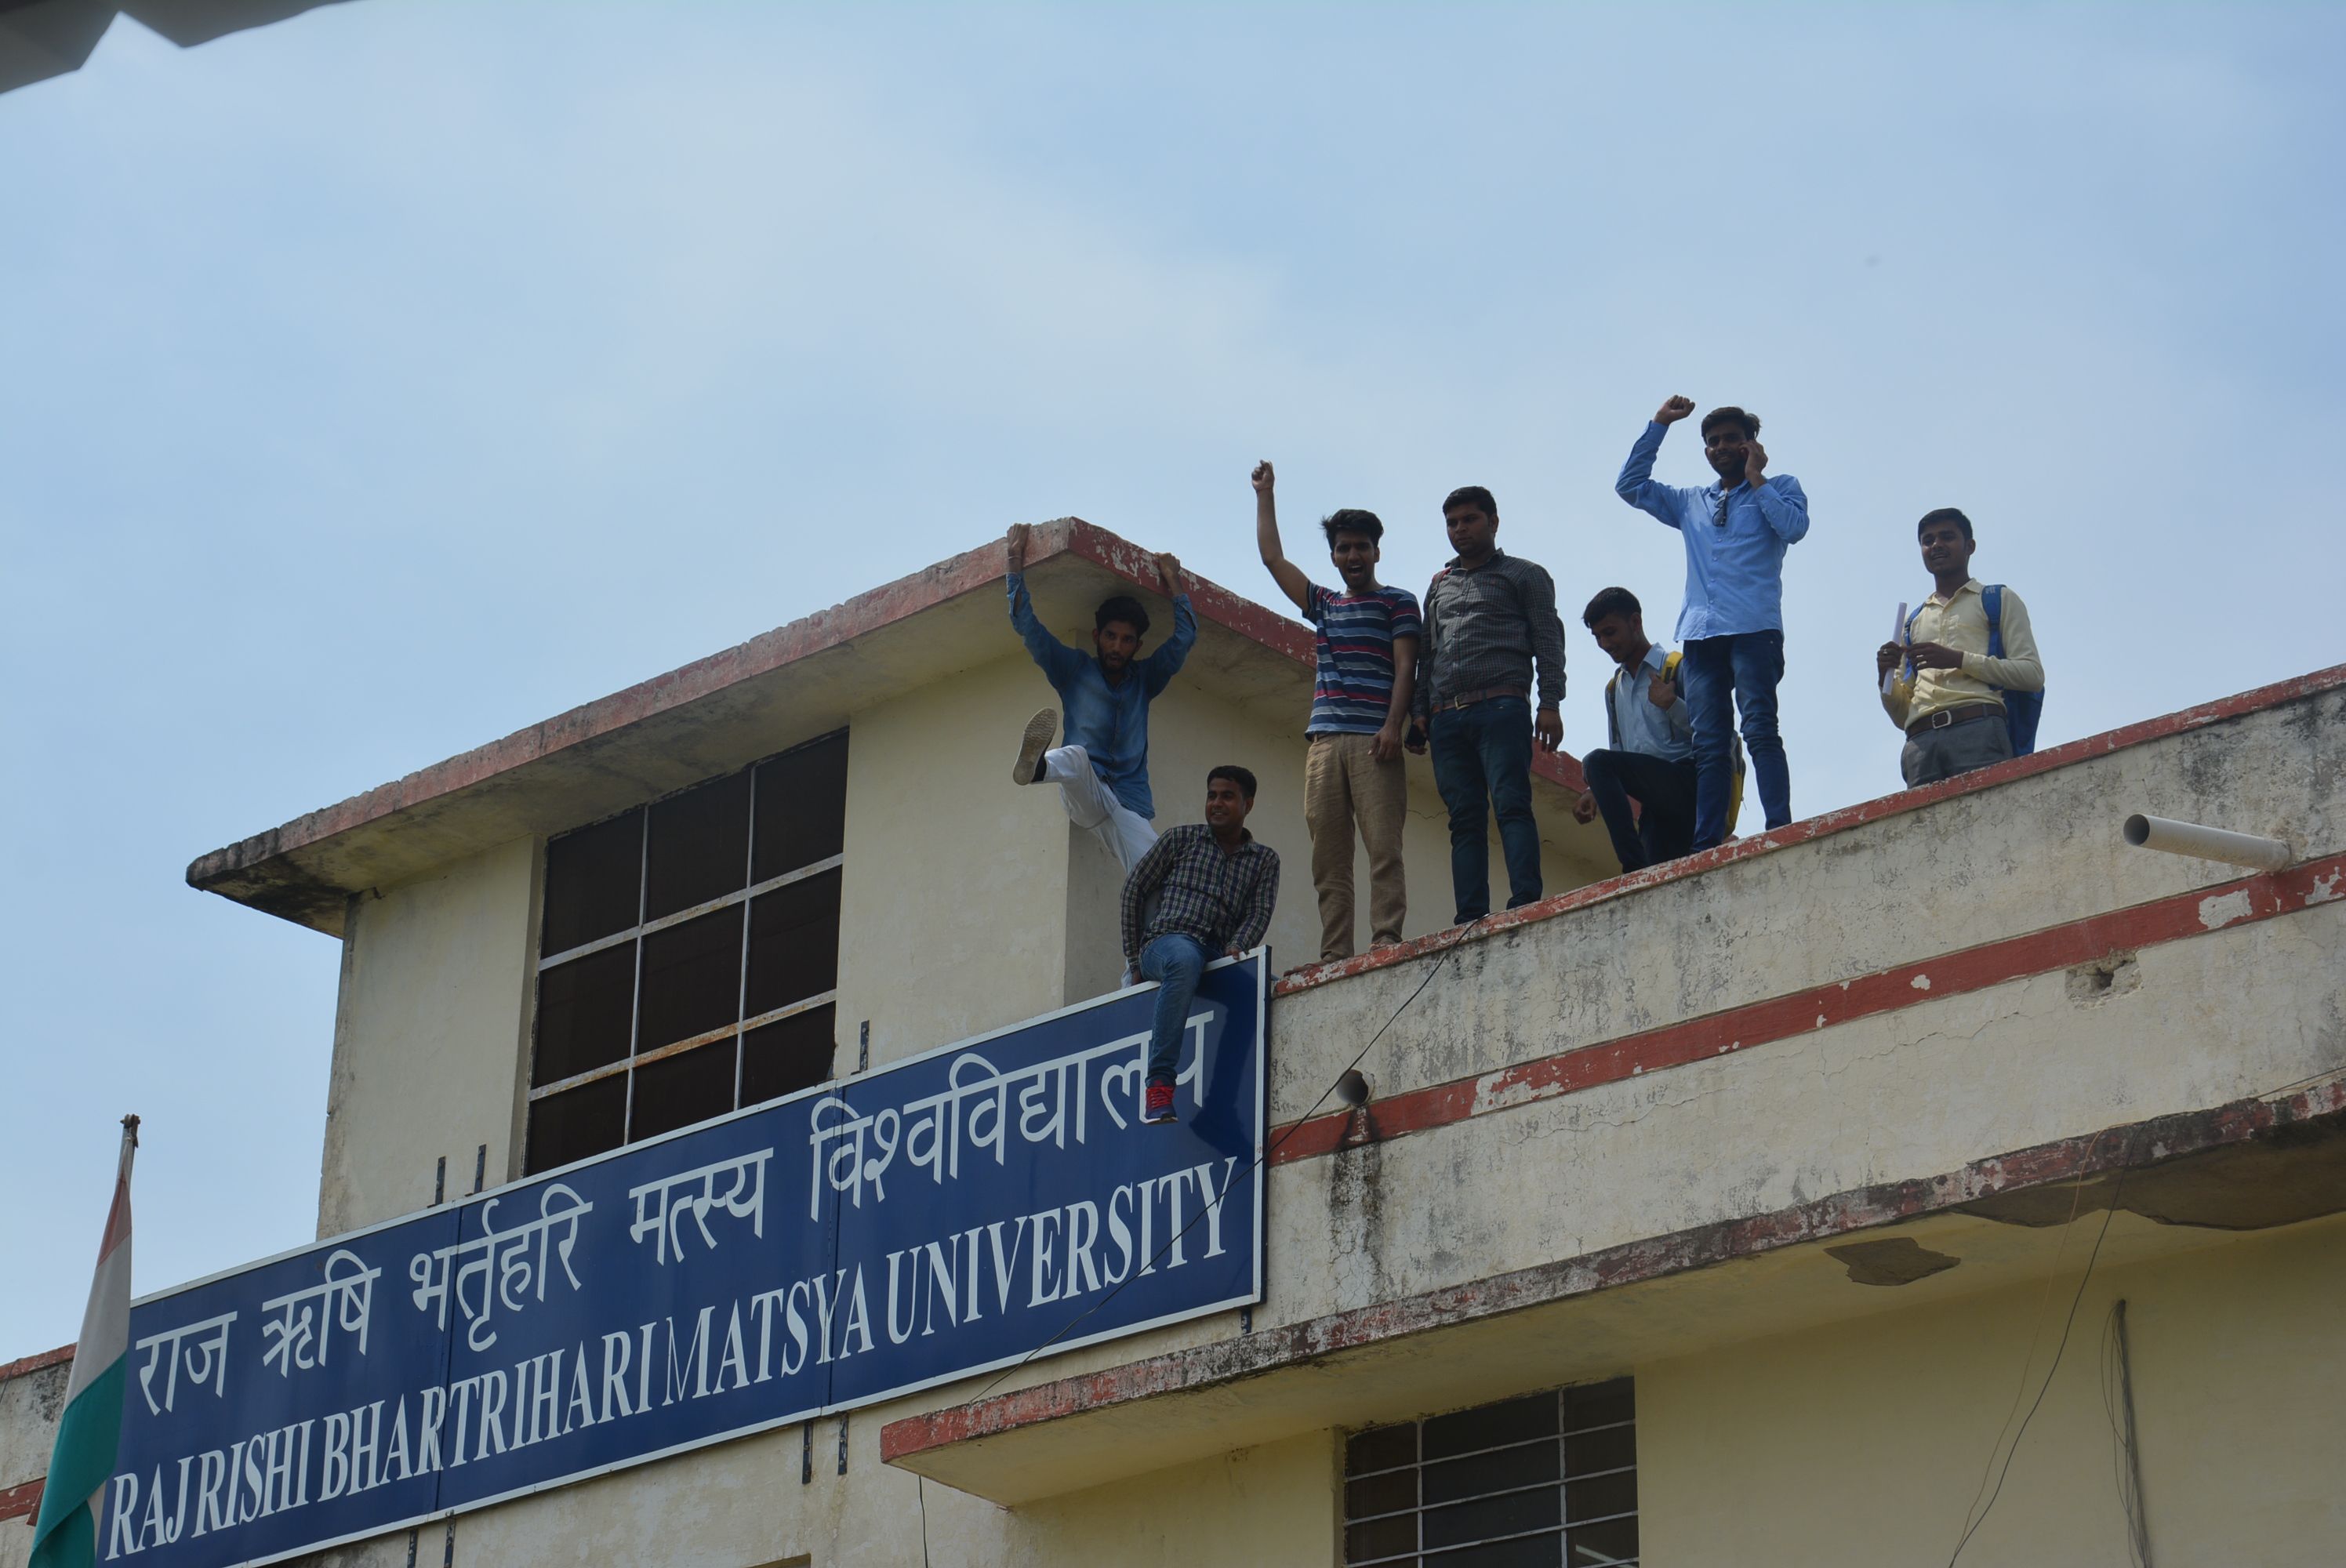 Matsya university students warns of suicide from roof of university